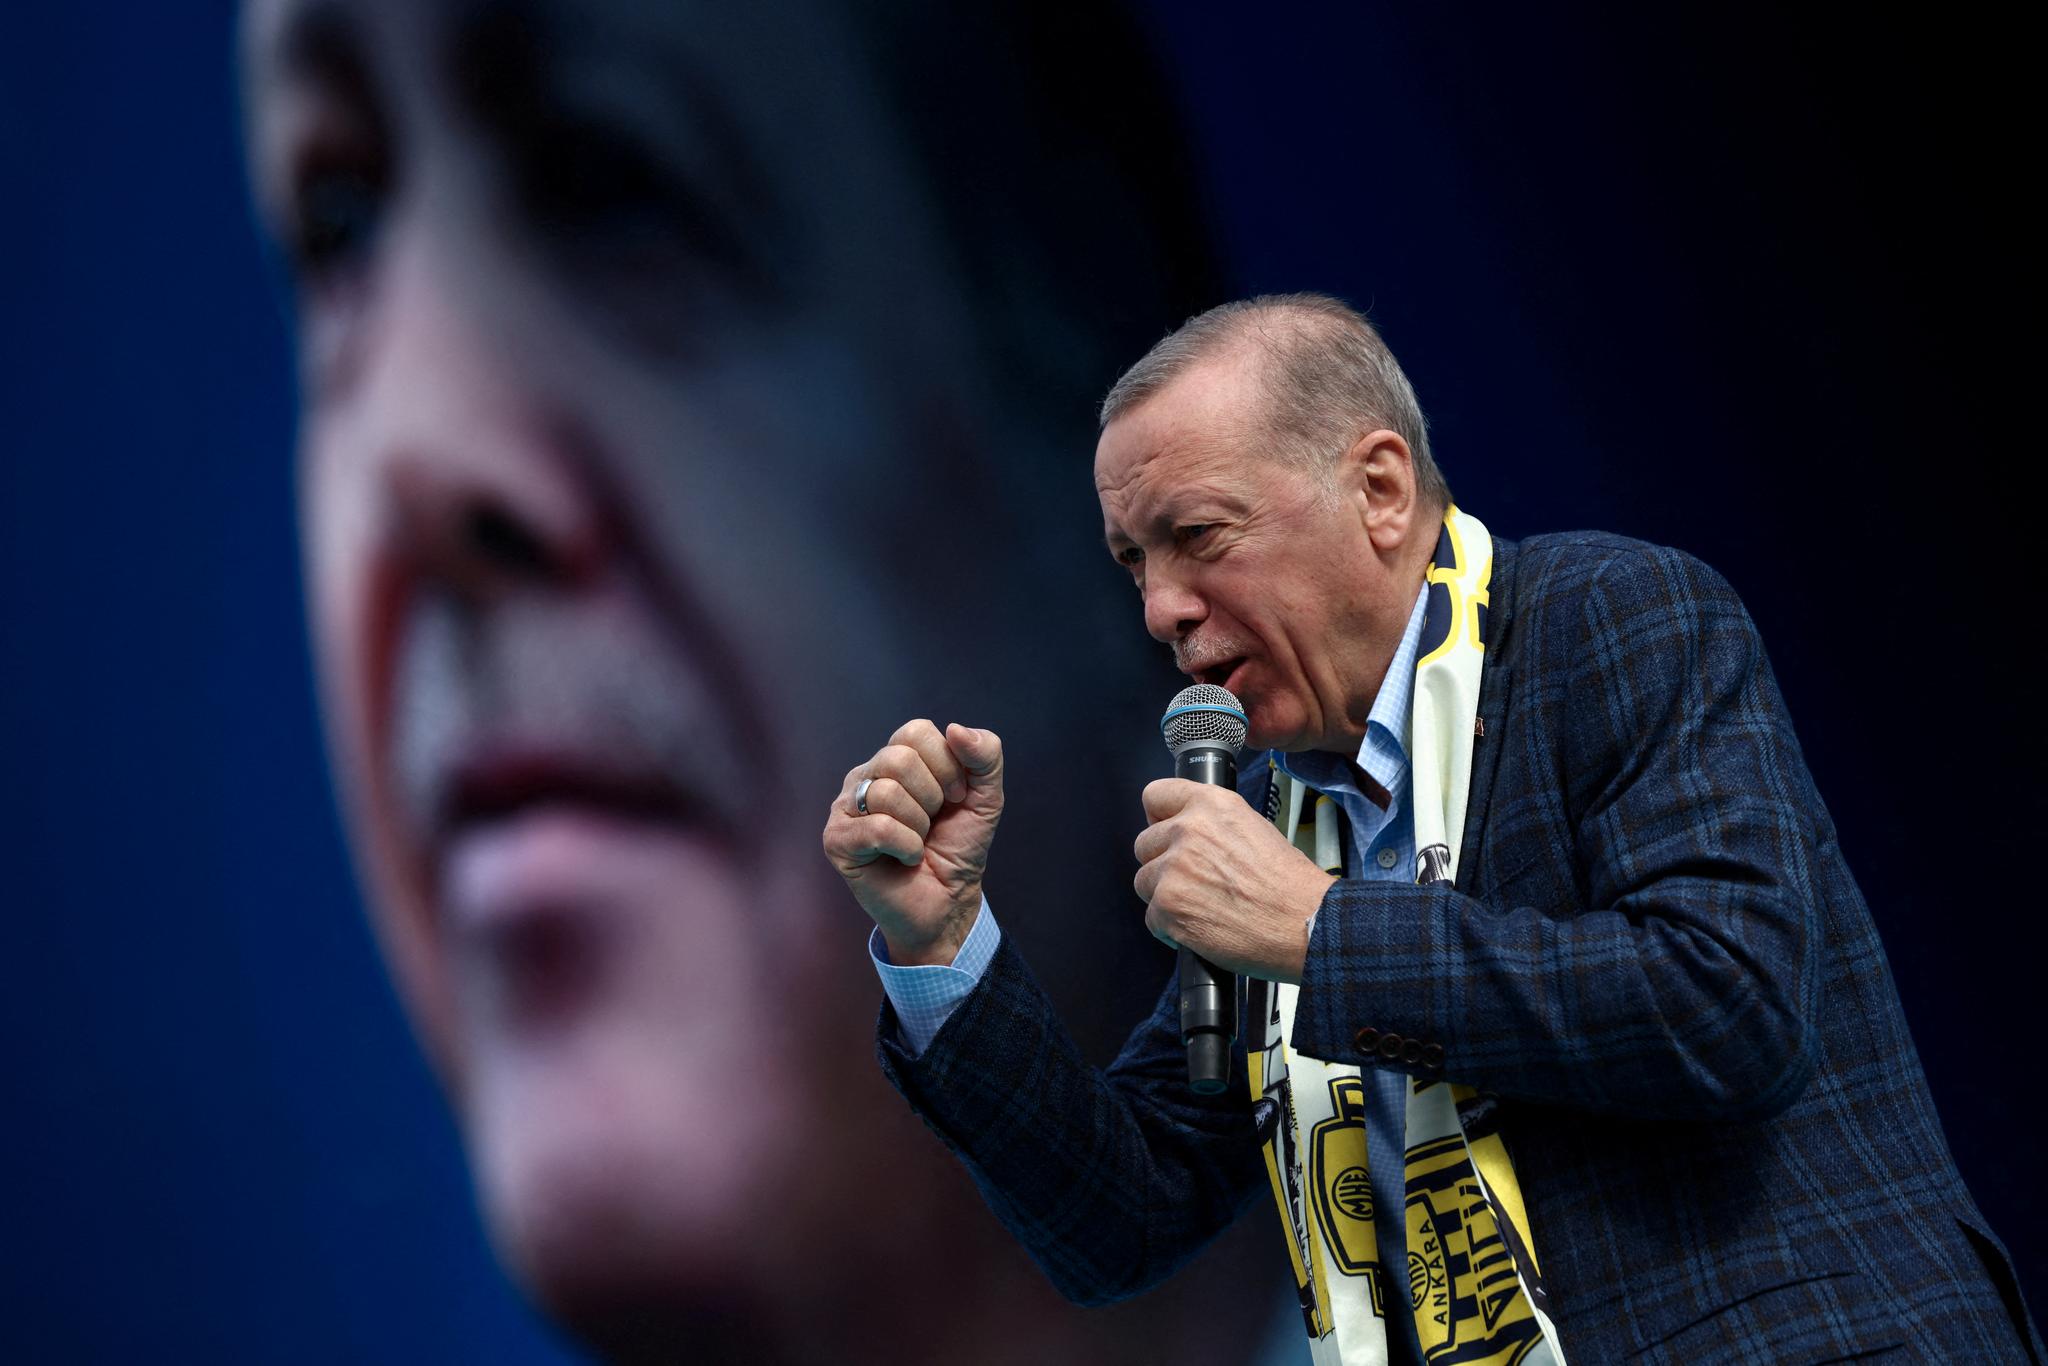 President Recep Tayyip Erdogan (bildet) ser Tyrkias fremtid som en regional stormakt, skriver kronikkforfatteren. Bildet er tatt i Ankara 30. april under valgkampen.